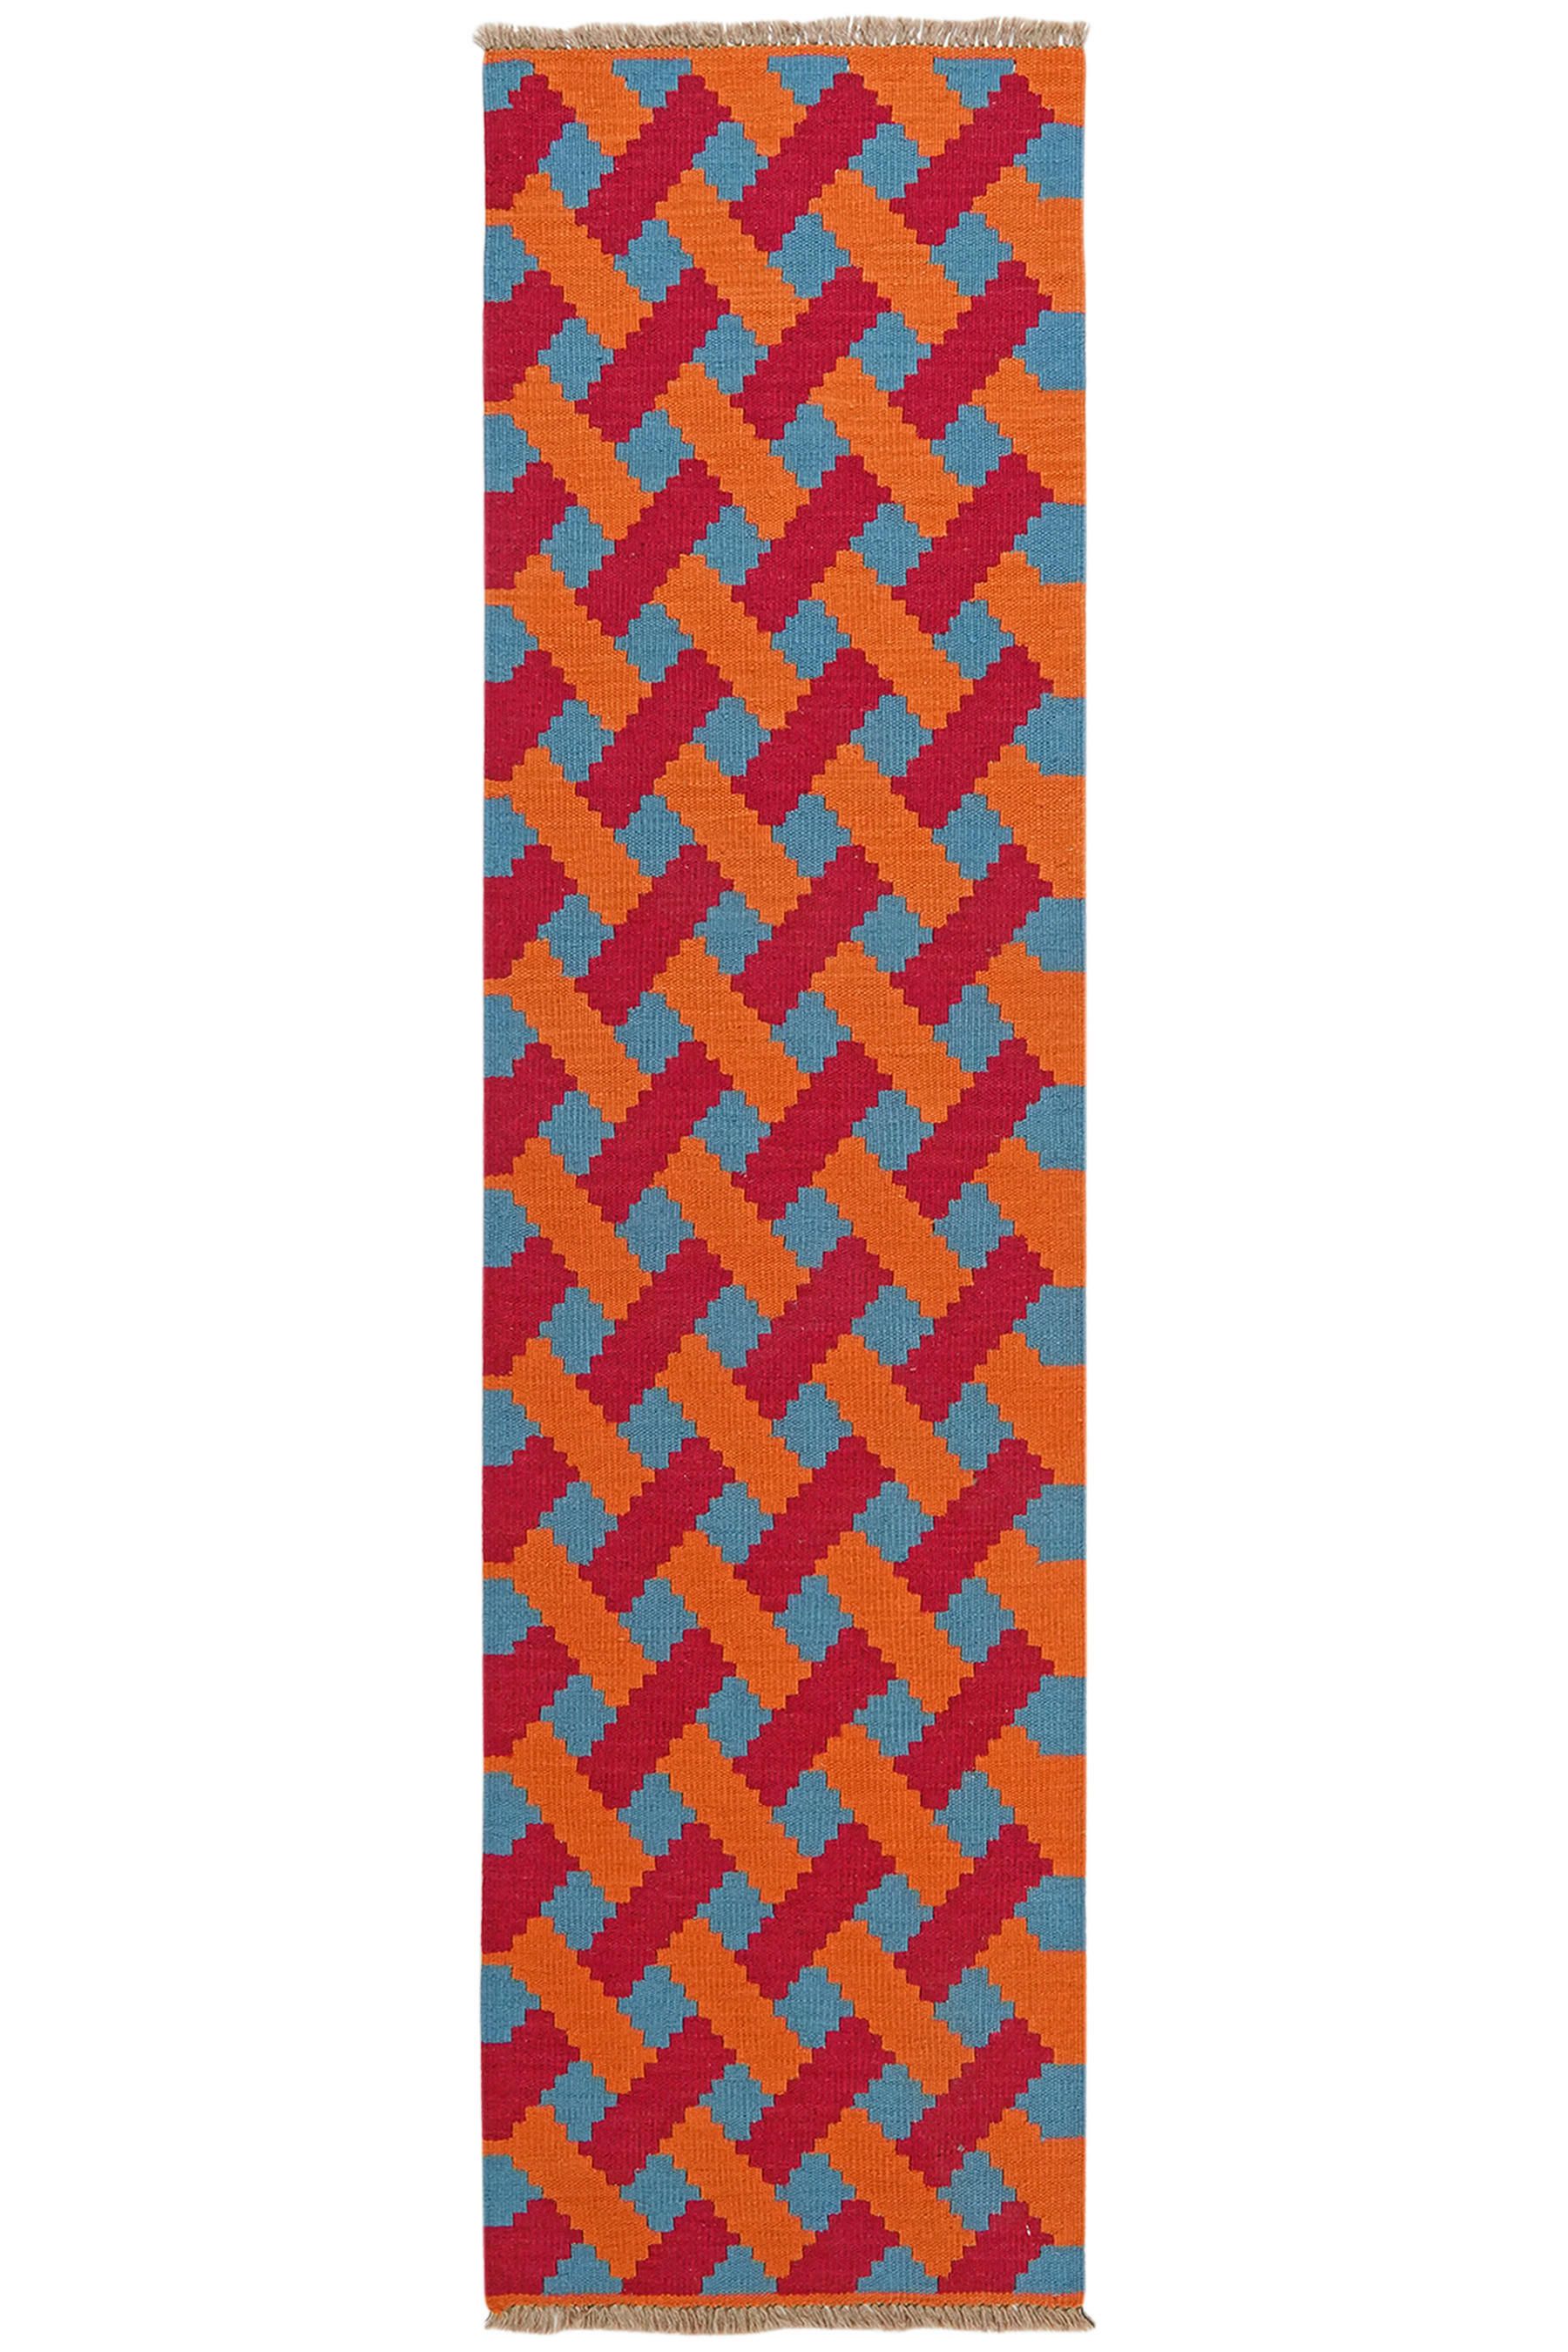 PersaTepp Teppich Kelim Gashgai multicolor B/L: ca. 64x237 cm Kelim Gashgai - multicolor (64,00/237,00cm) - PersaTepp